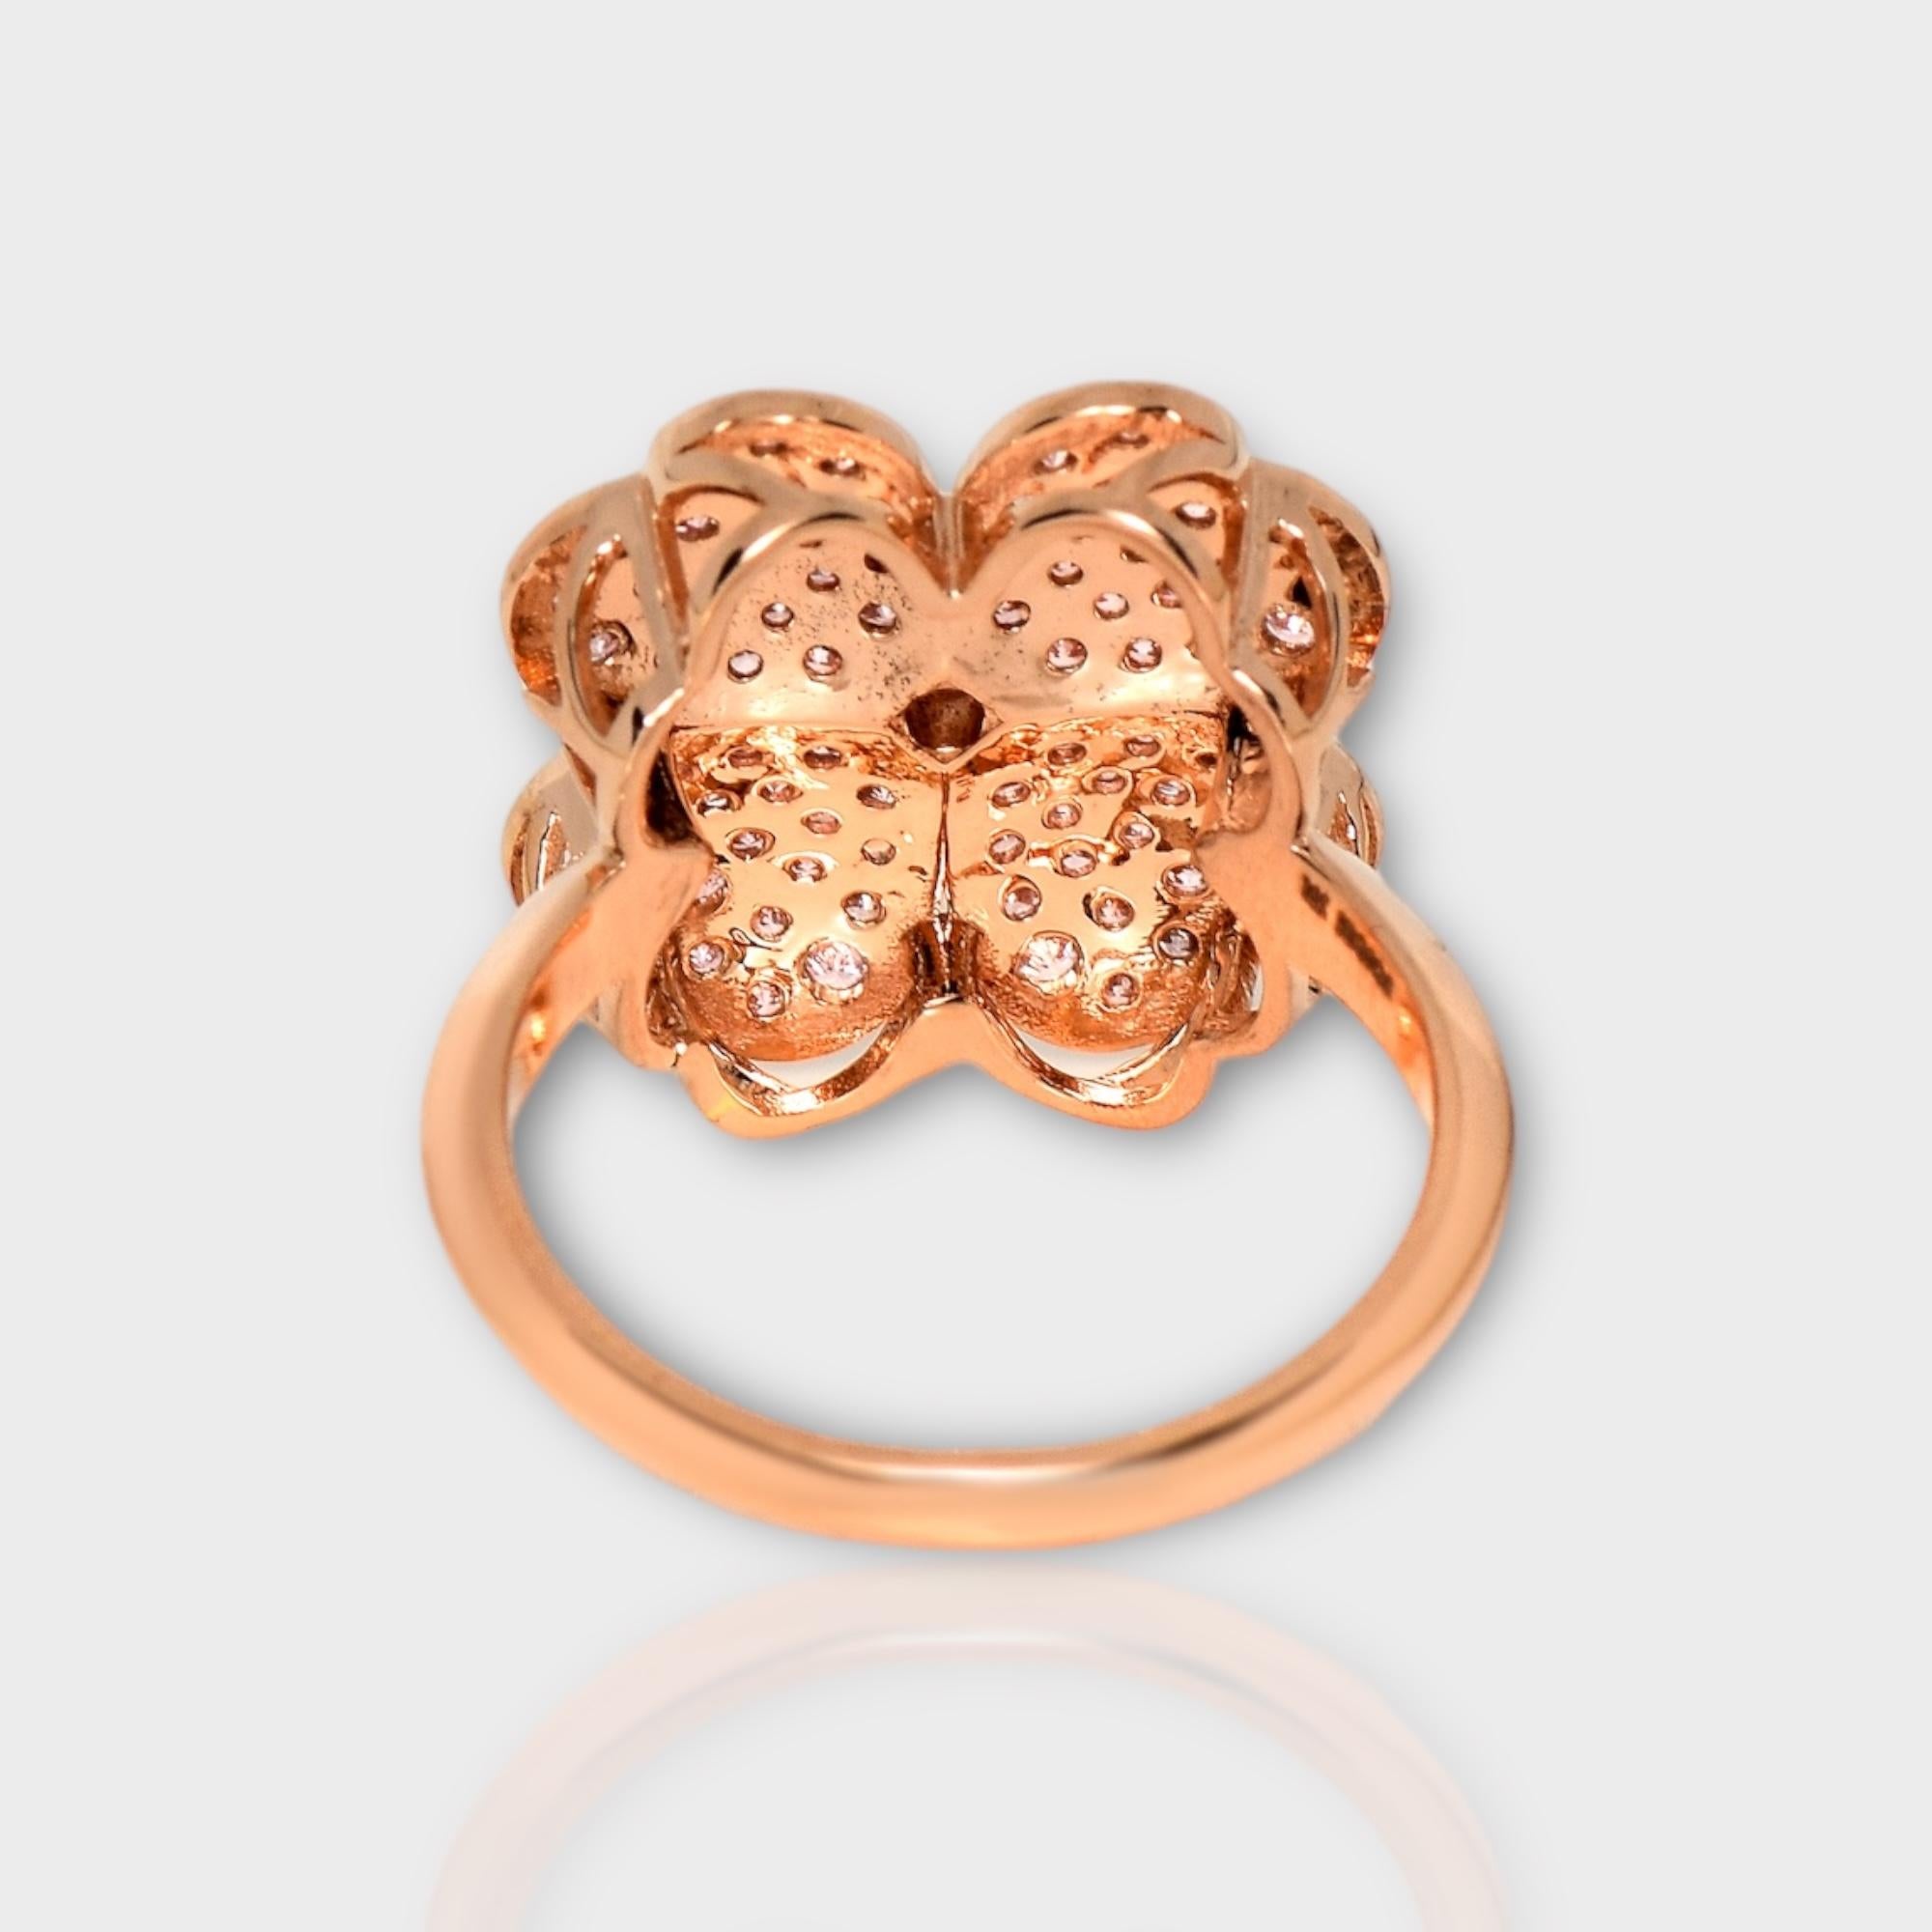 IGI 14K 0.98 ct Natural Pink Diamonds Lucky Clover Antique Design Ring For Sale 2